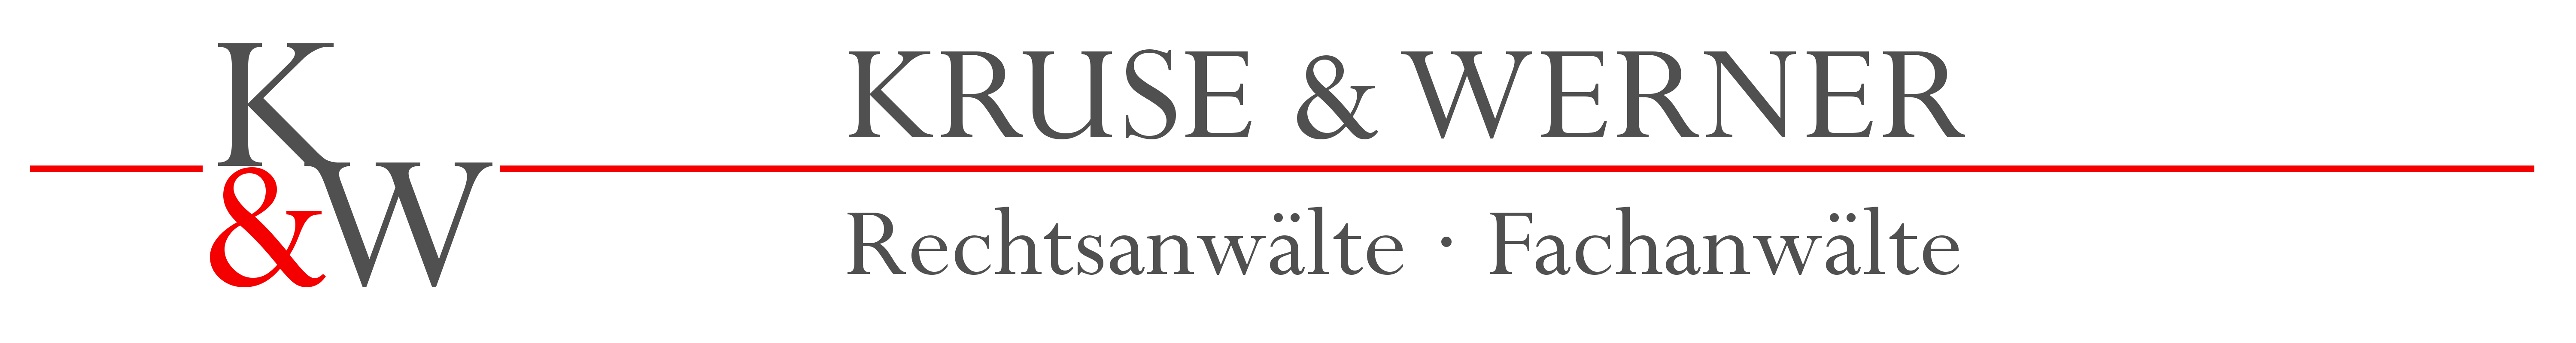 Logo Kruse & Werner